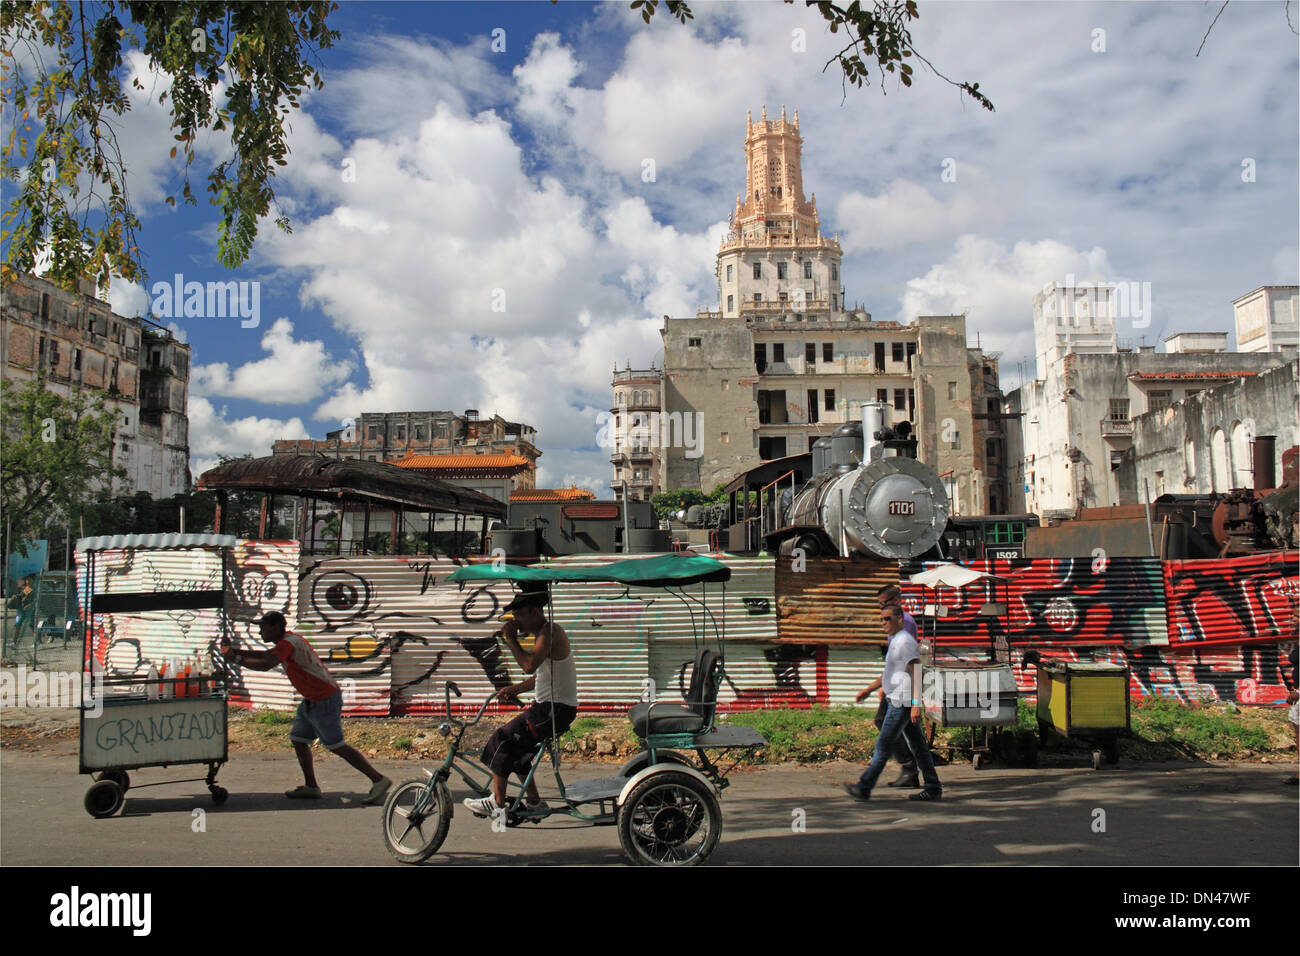 Alte Dampfmaschinen in Schrottplatz, Calle Industria, die Altstadt von Havanna (La Habana Vieja), Kuba, Karibik, Mittelamerika Stockfoto